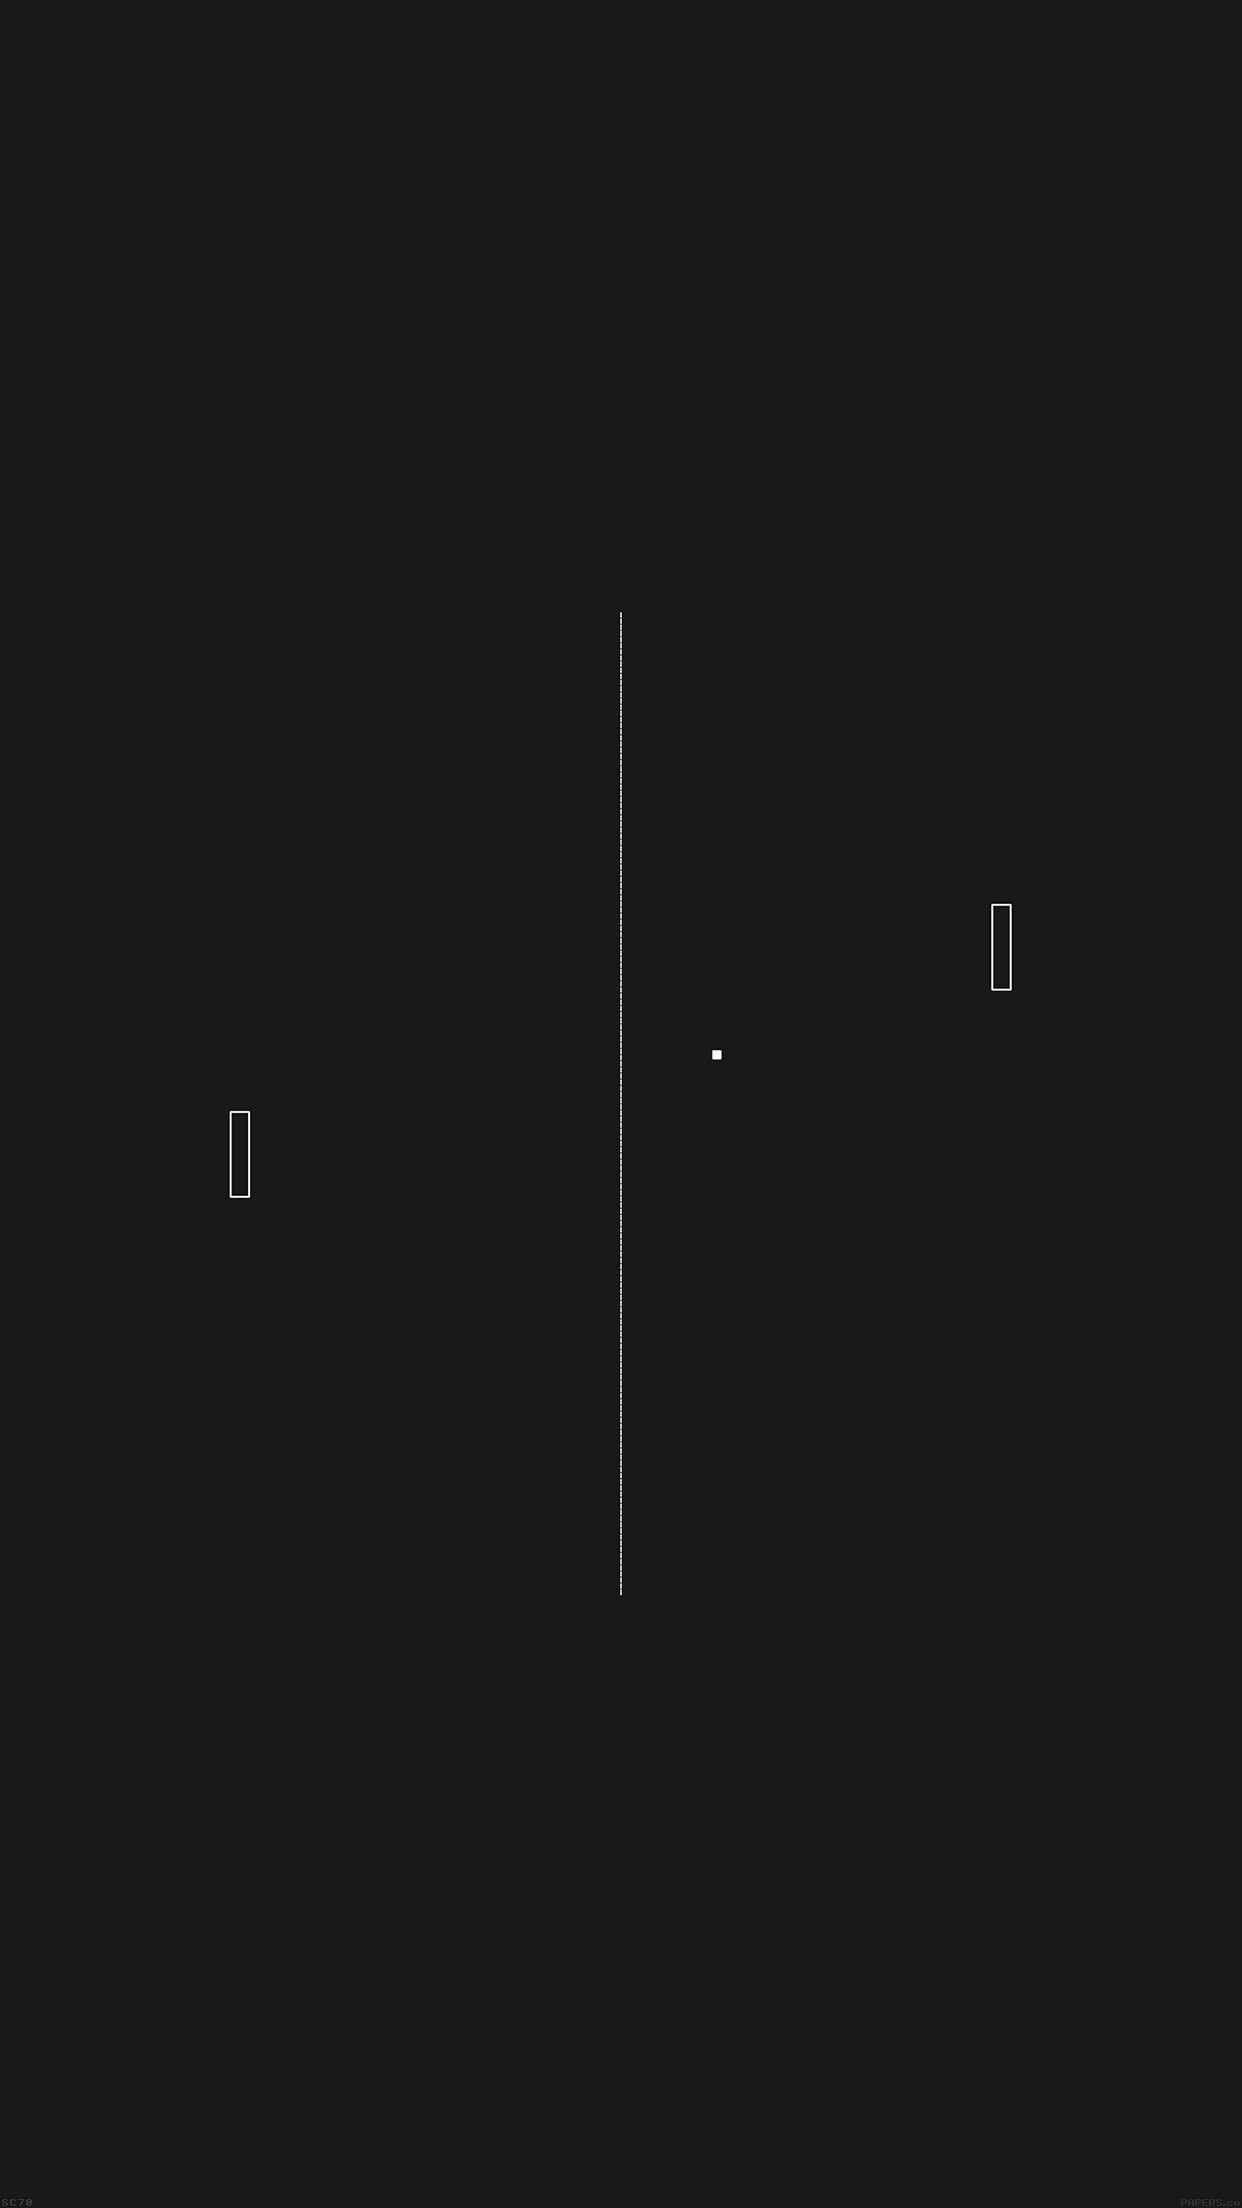 dark minimalist iphone wallpaper